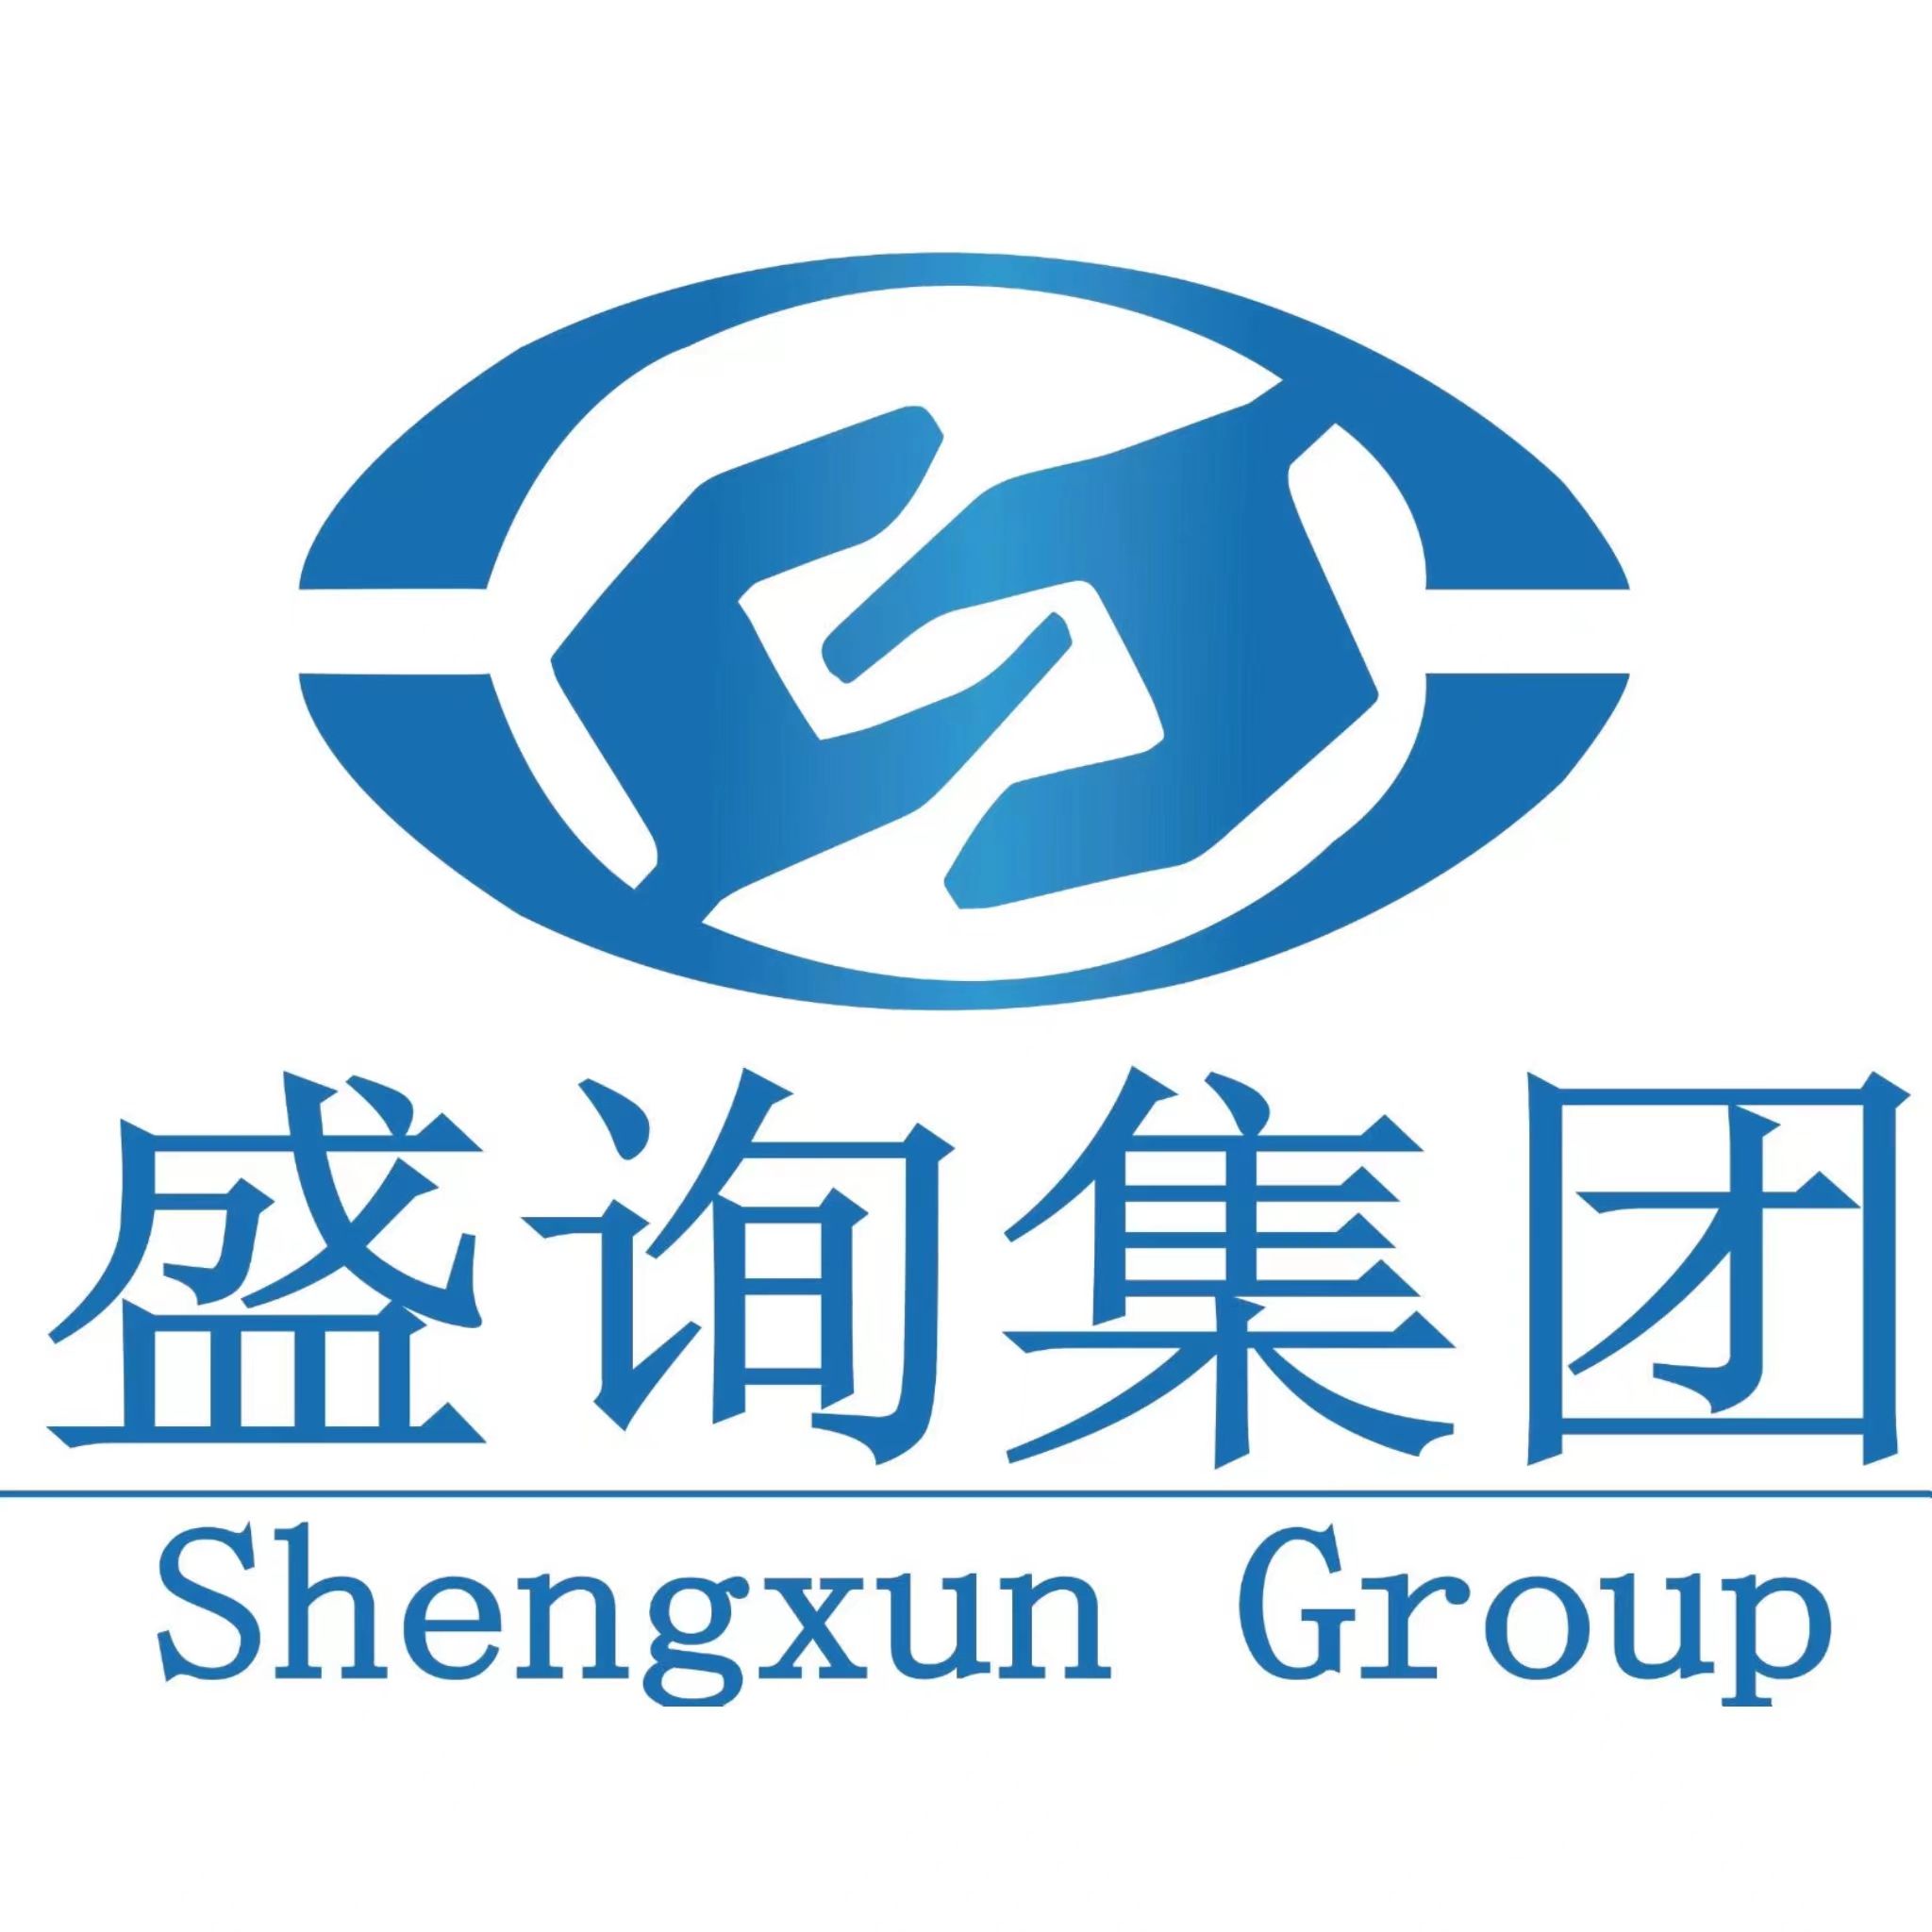 Sheng xun Group logo